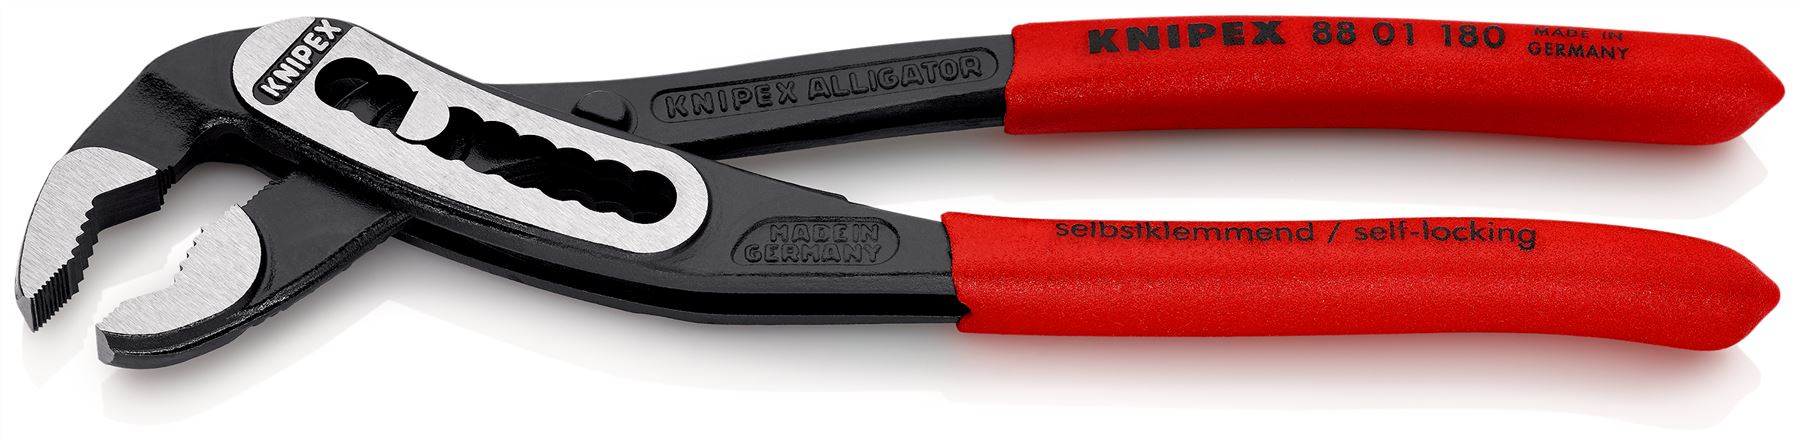 KNIPEX Alligator Water Pump Pliers 180mm Plastic Coated Handles Non Slip 88 01 180 SB